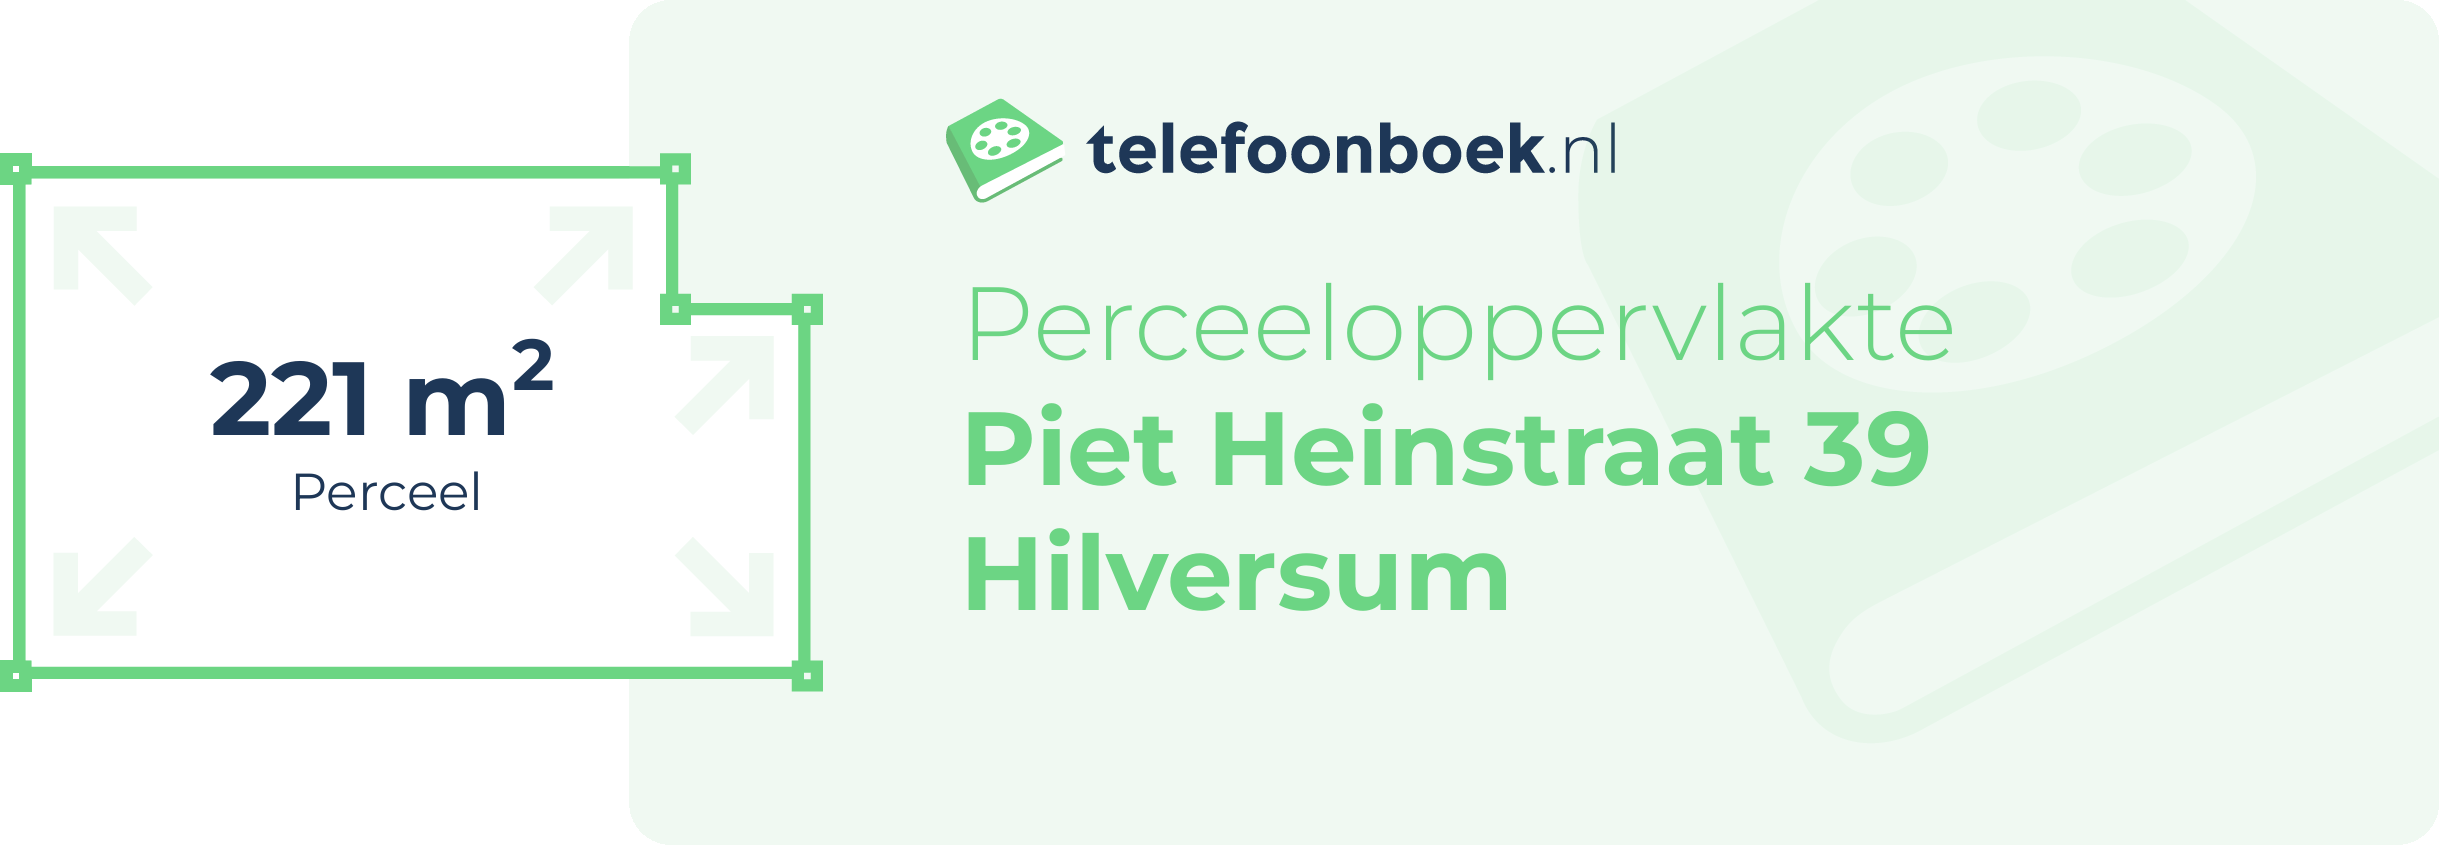 Perceeloppervlakte Piet Heinstraat 39 Hilversum